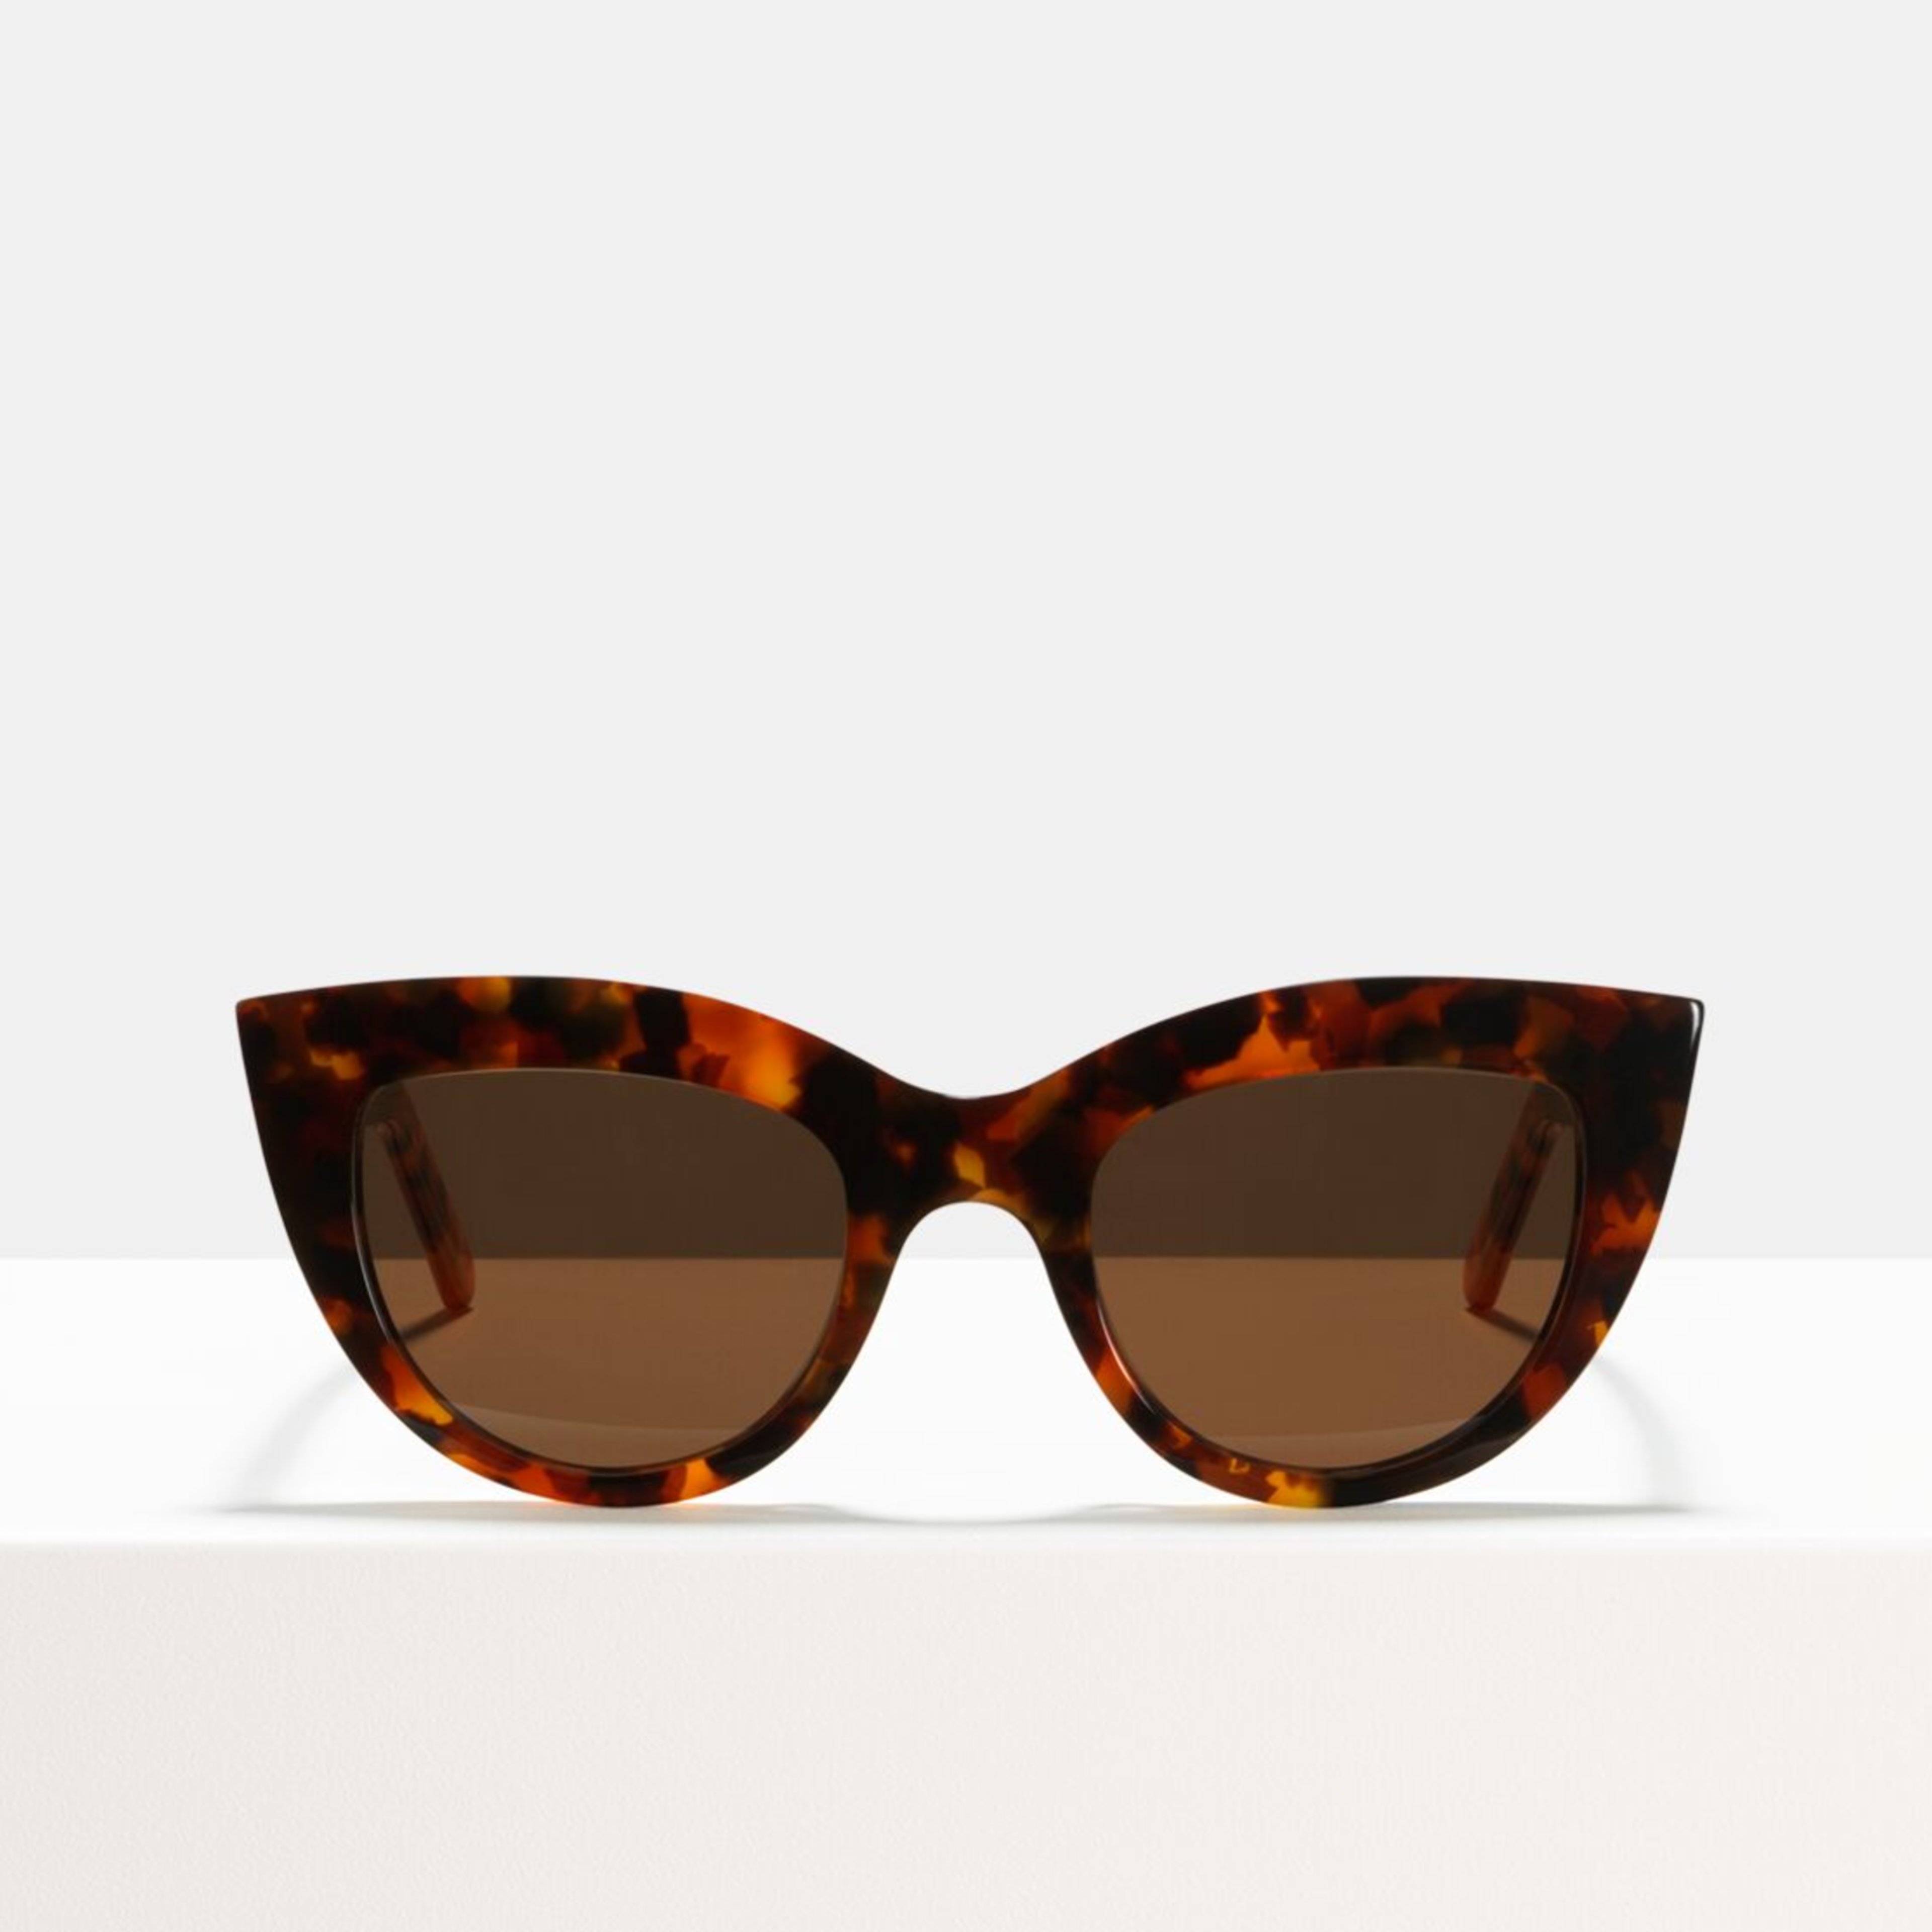 Ace & Tate Sunglasses |  acetato in Marrón, Naranja